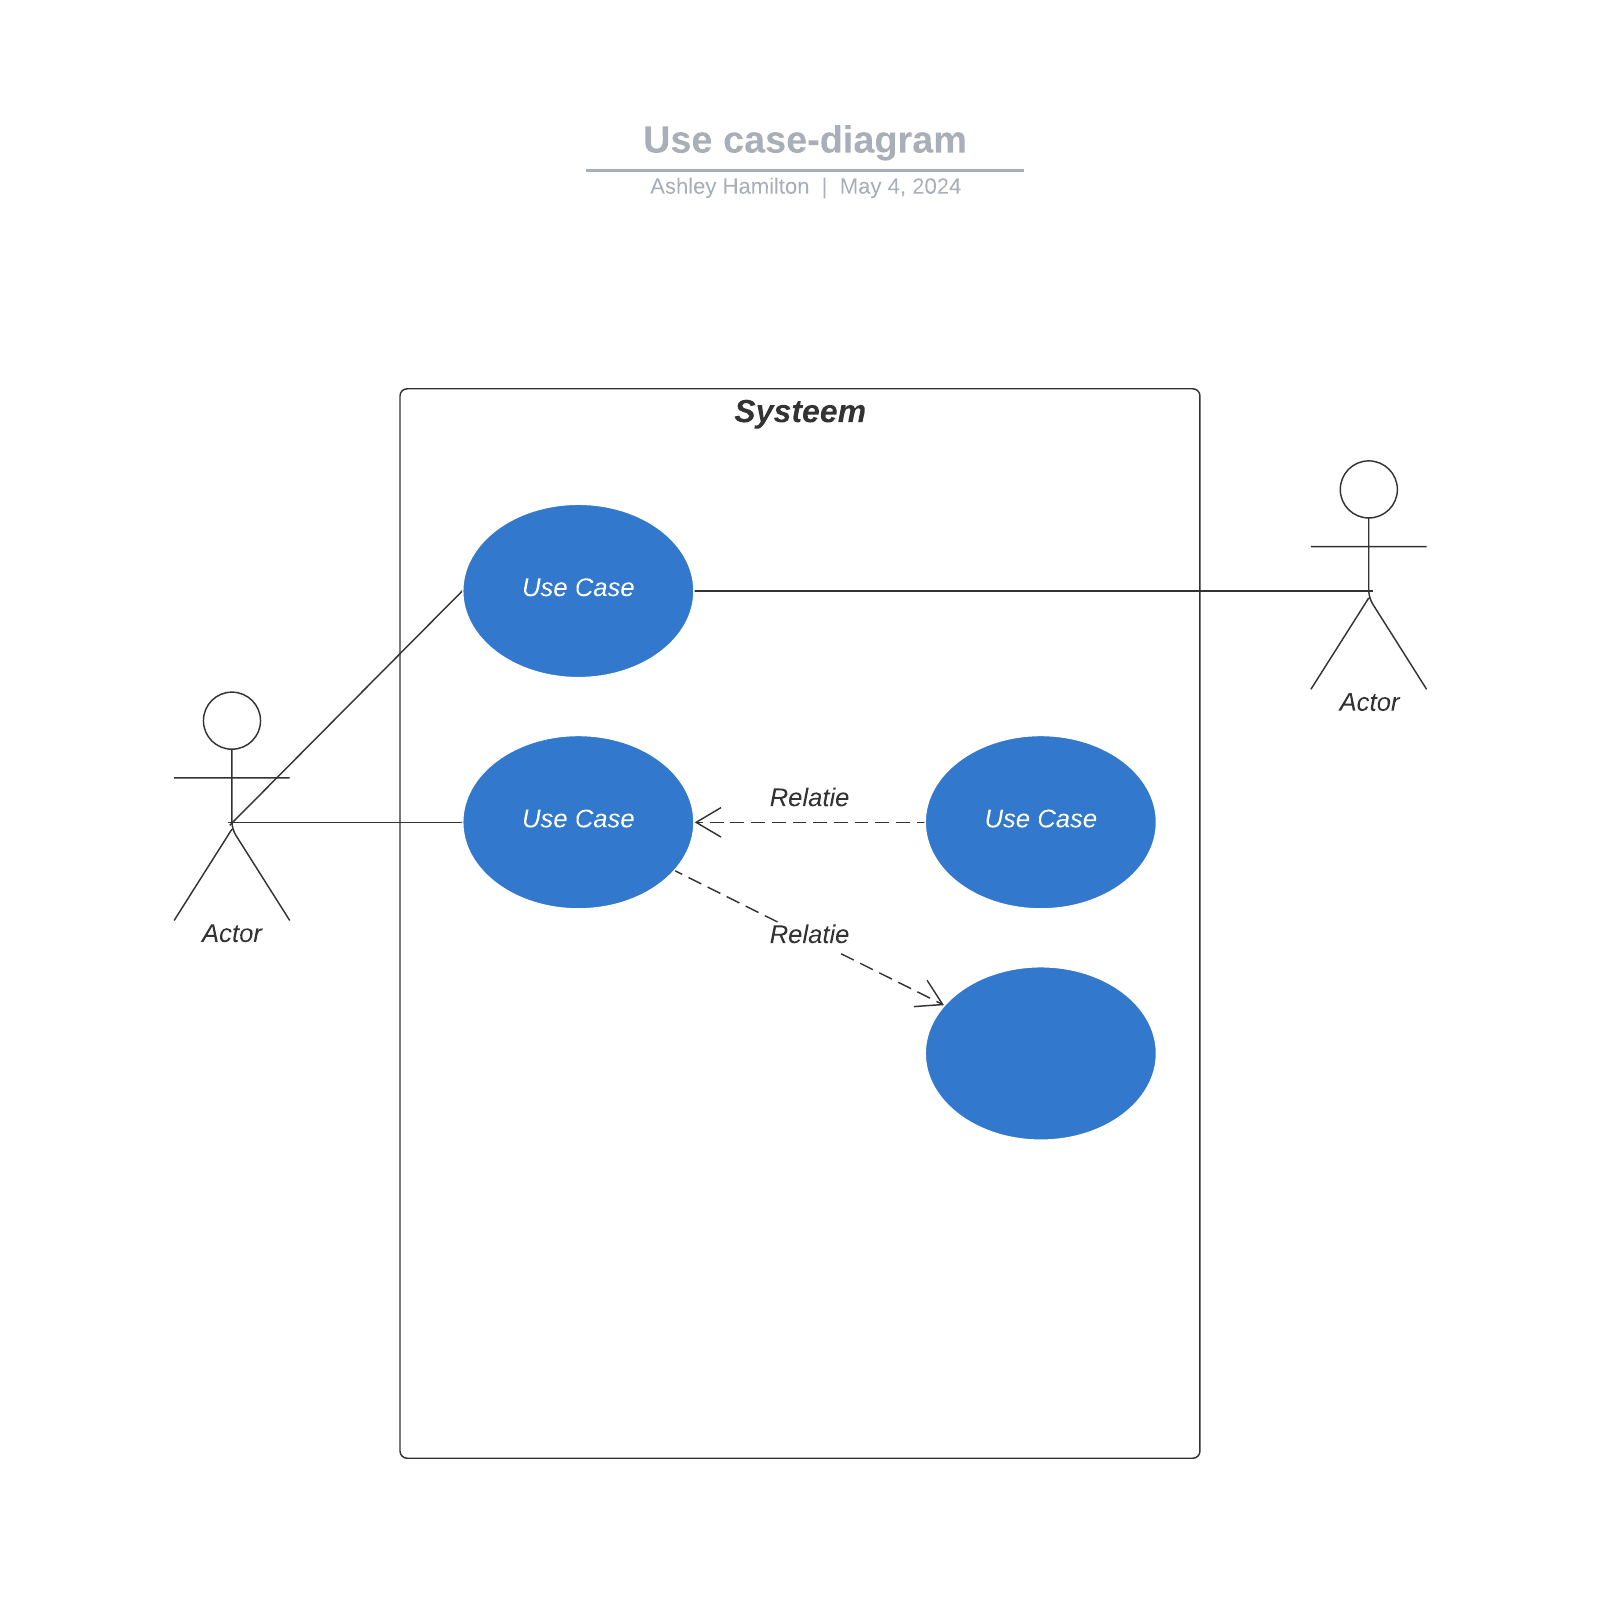 Use case-diagram example